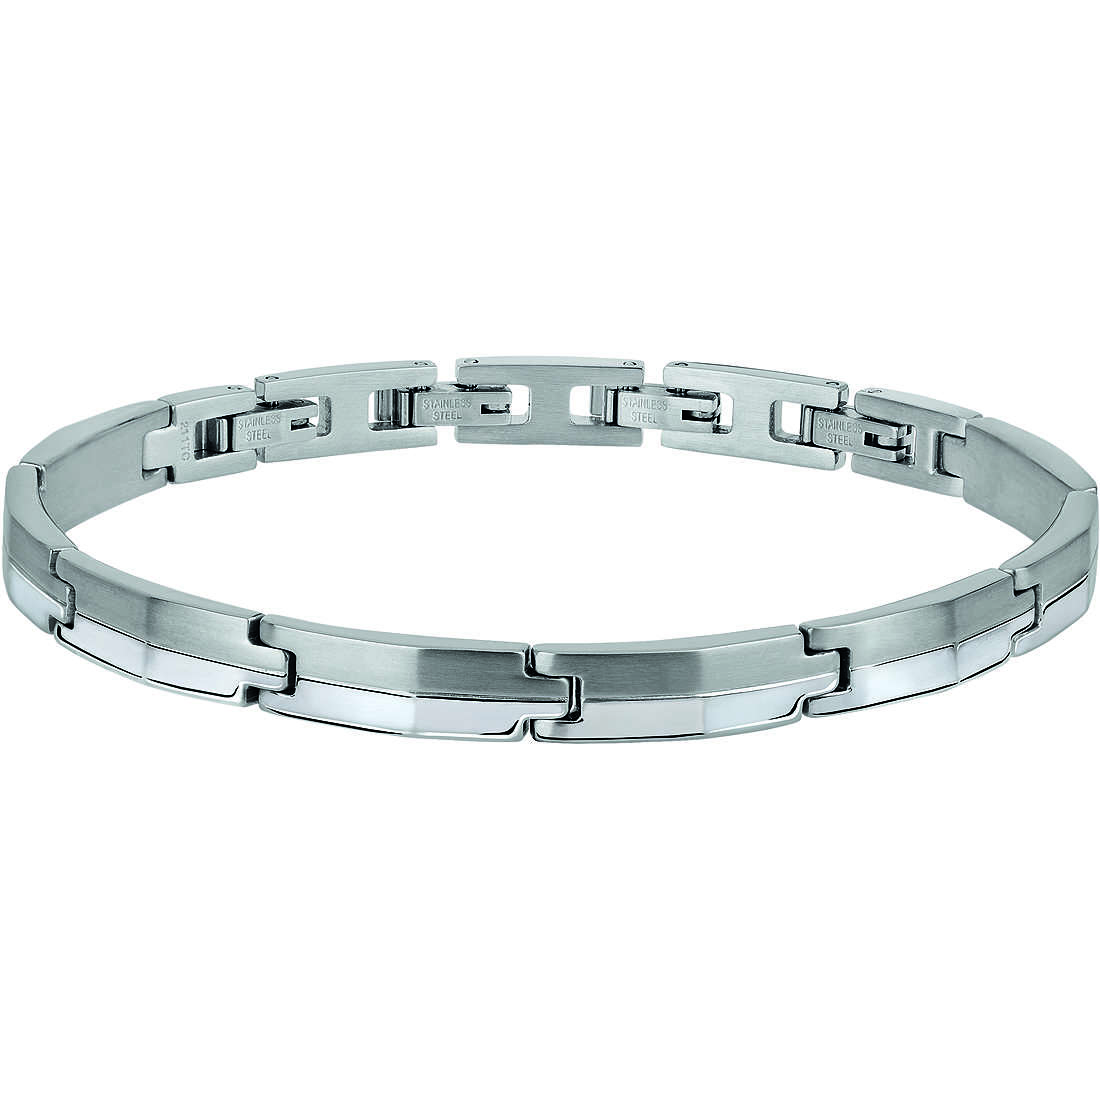 bracelet man jewellery Breil TJ2988